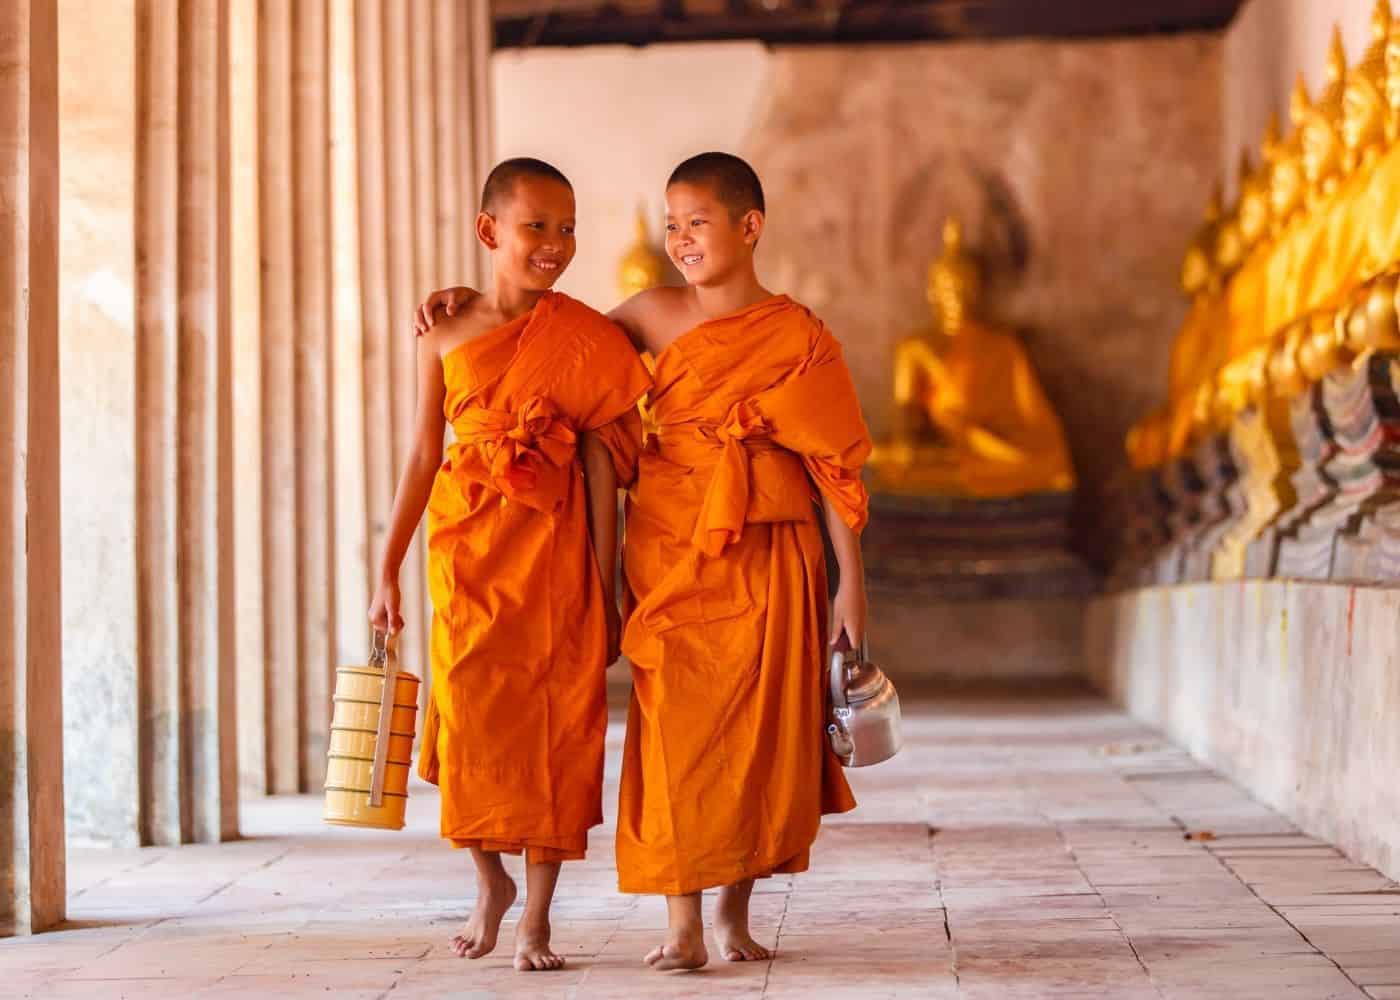 Thailand - Golden Temple - Child Monks Walking arm in arm